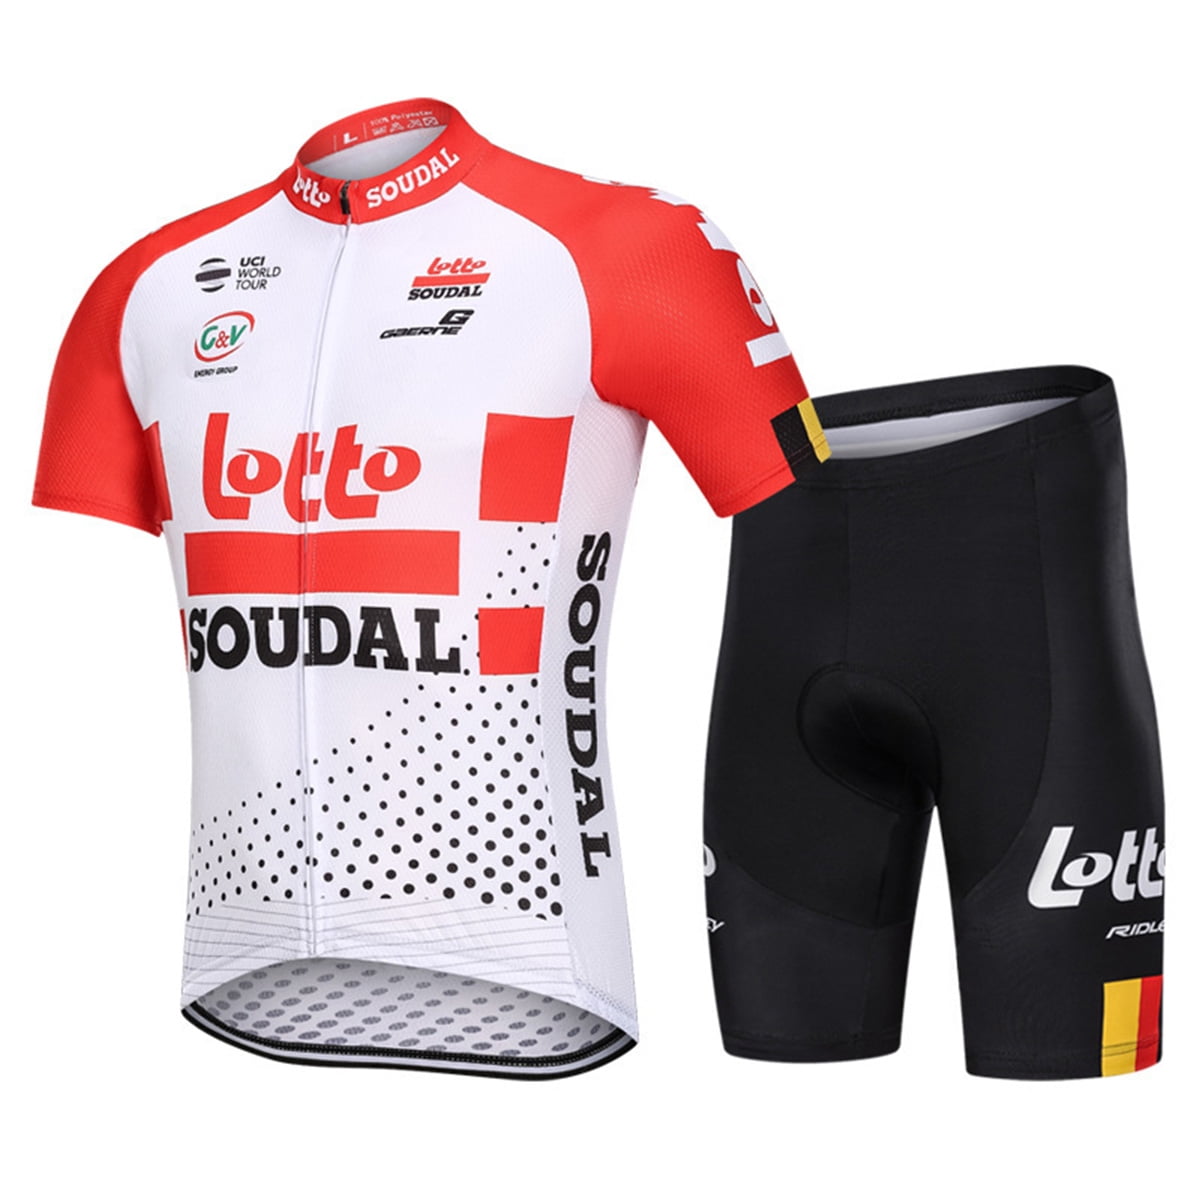 Men's Cycle Clothing Reflective Cycling Jersey and Bib Shorts Padded Kit S-5XL 